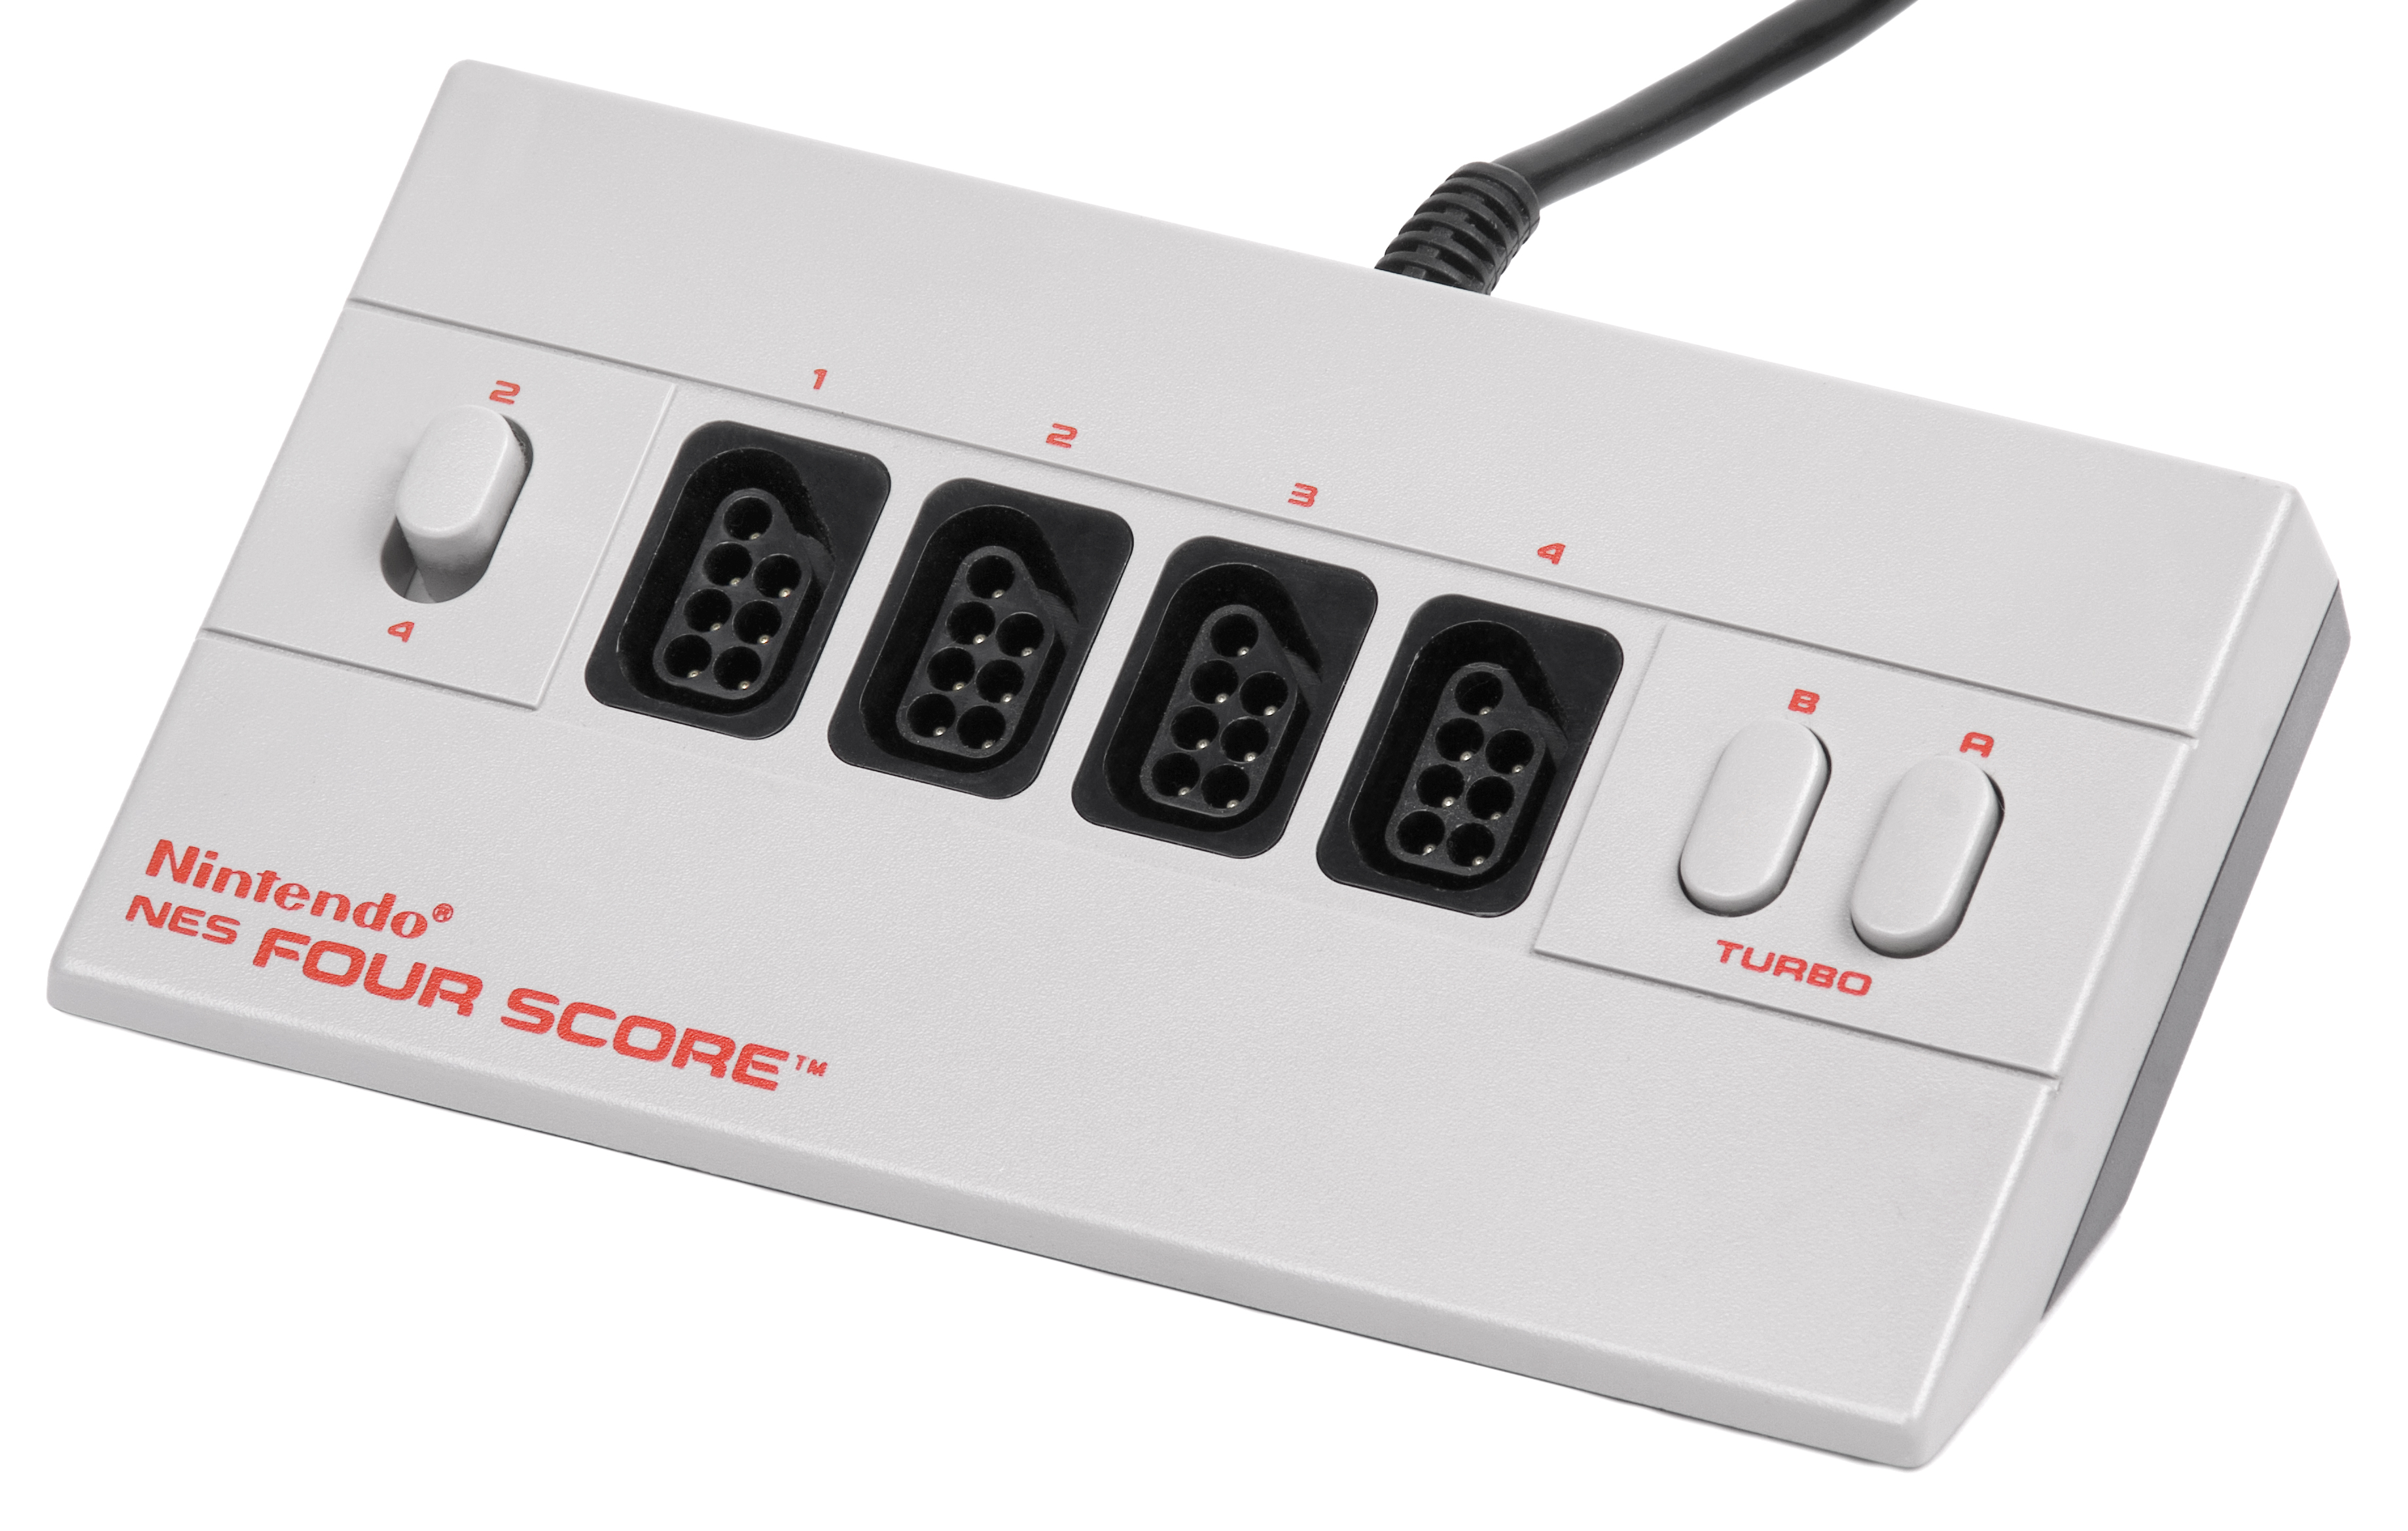 NES Four Score 3680x2340